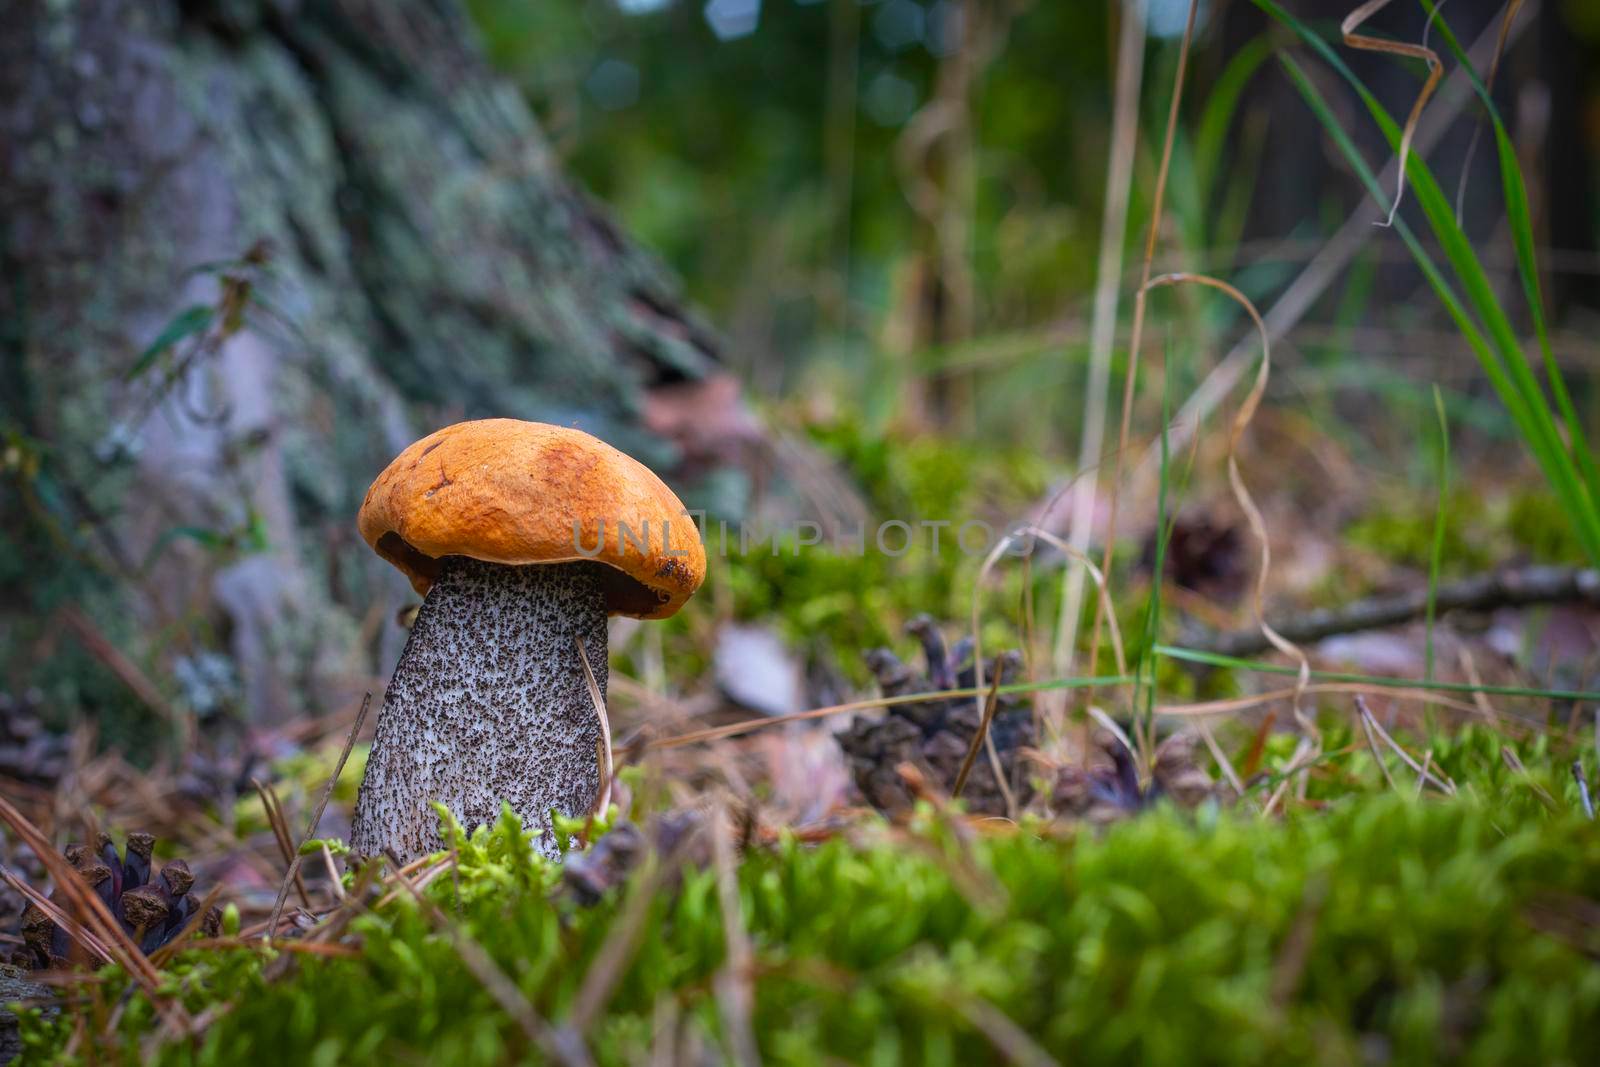 Boletus edulis mushroom in moss. Orange cap mushrooms in wood